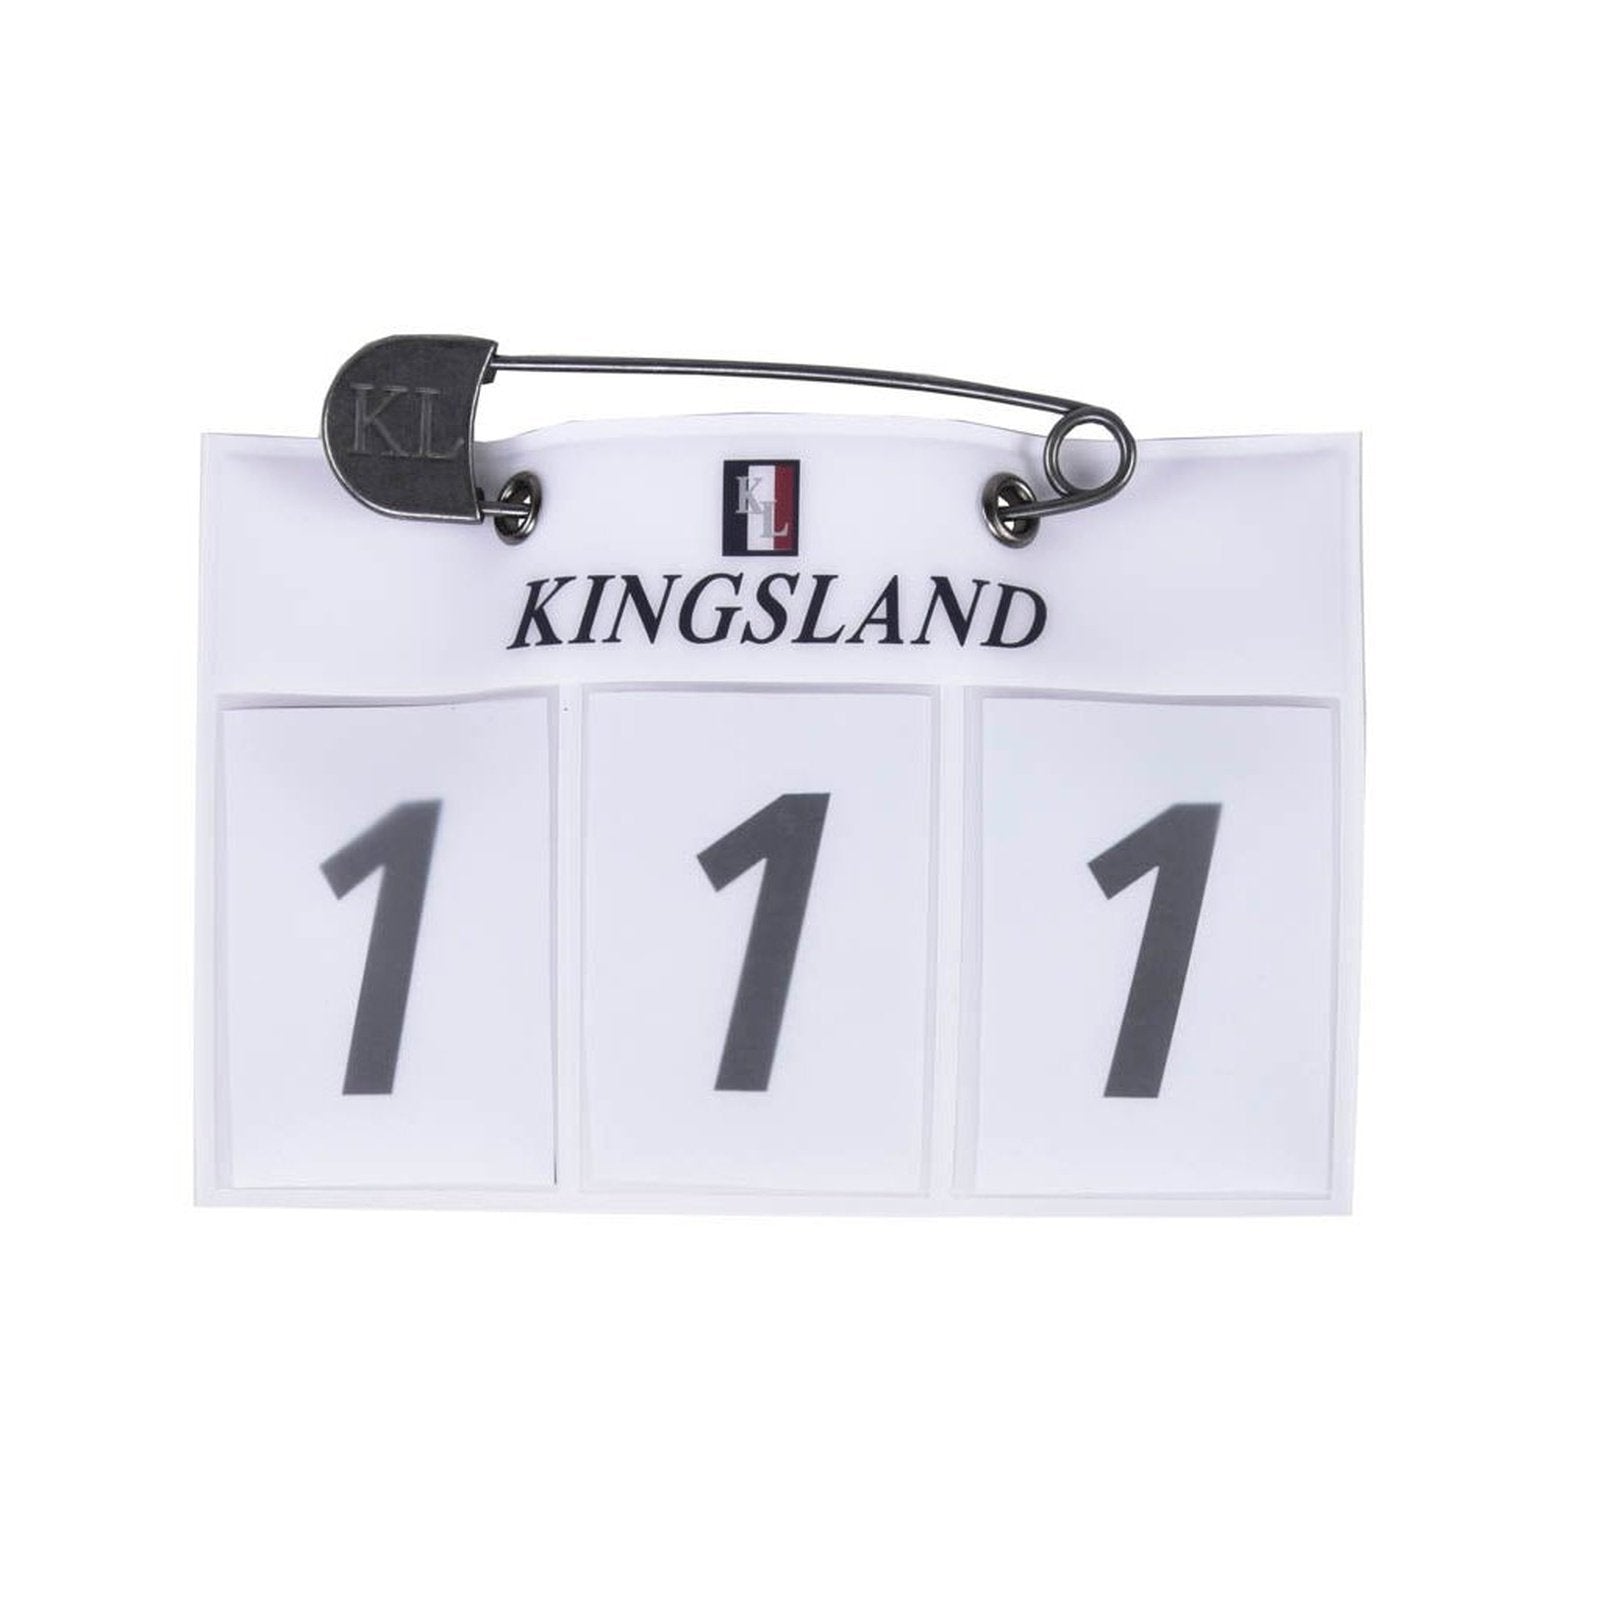 Kingsland Classic Startnummern in navy & weiß bei SP-Reitsport Kingsland bei SP-Reitsport